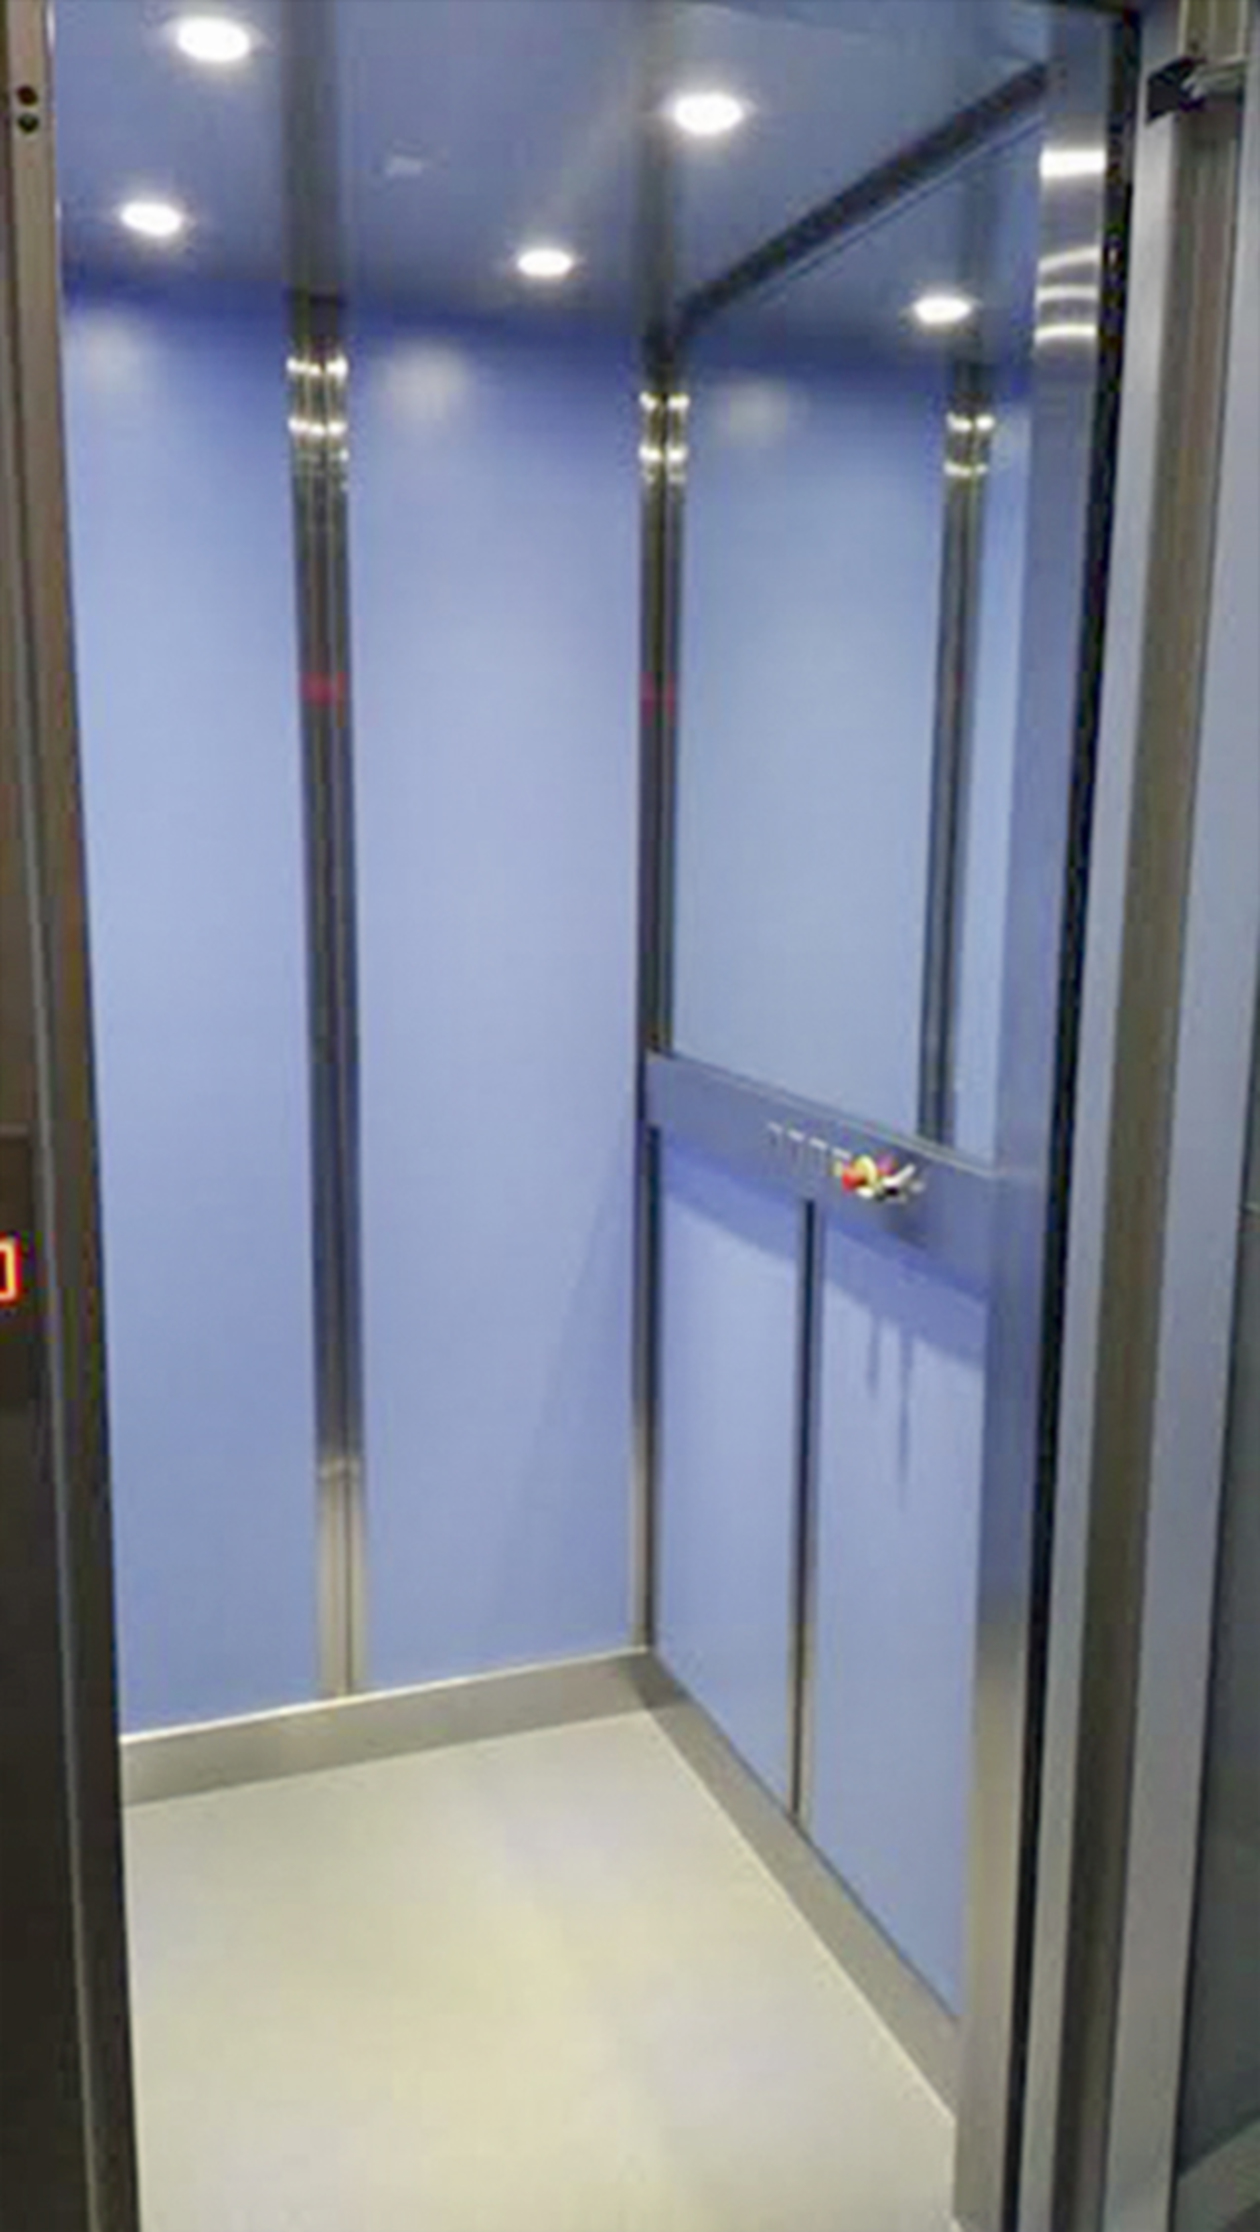 hidroplane-ascensores